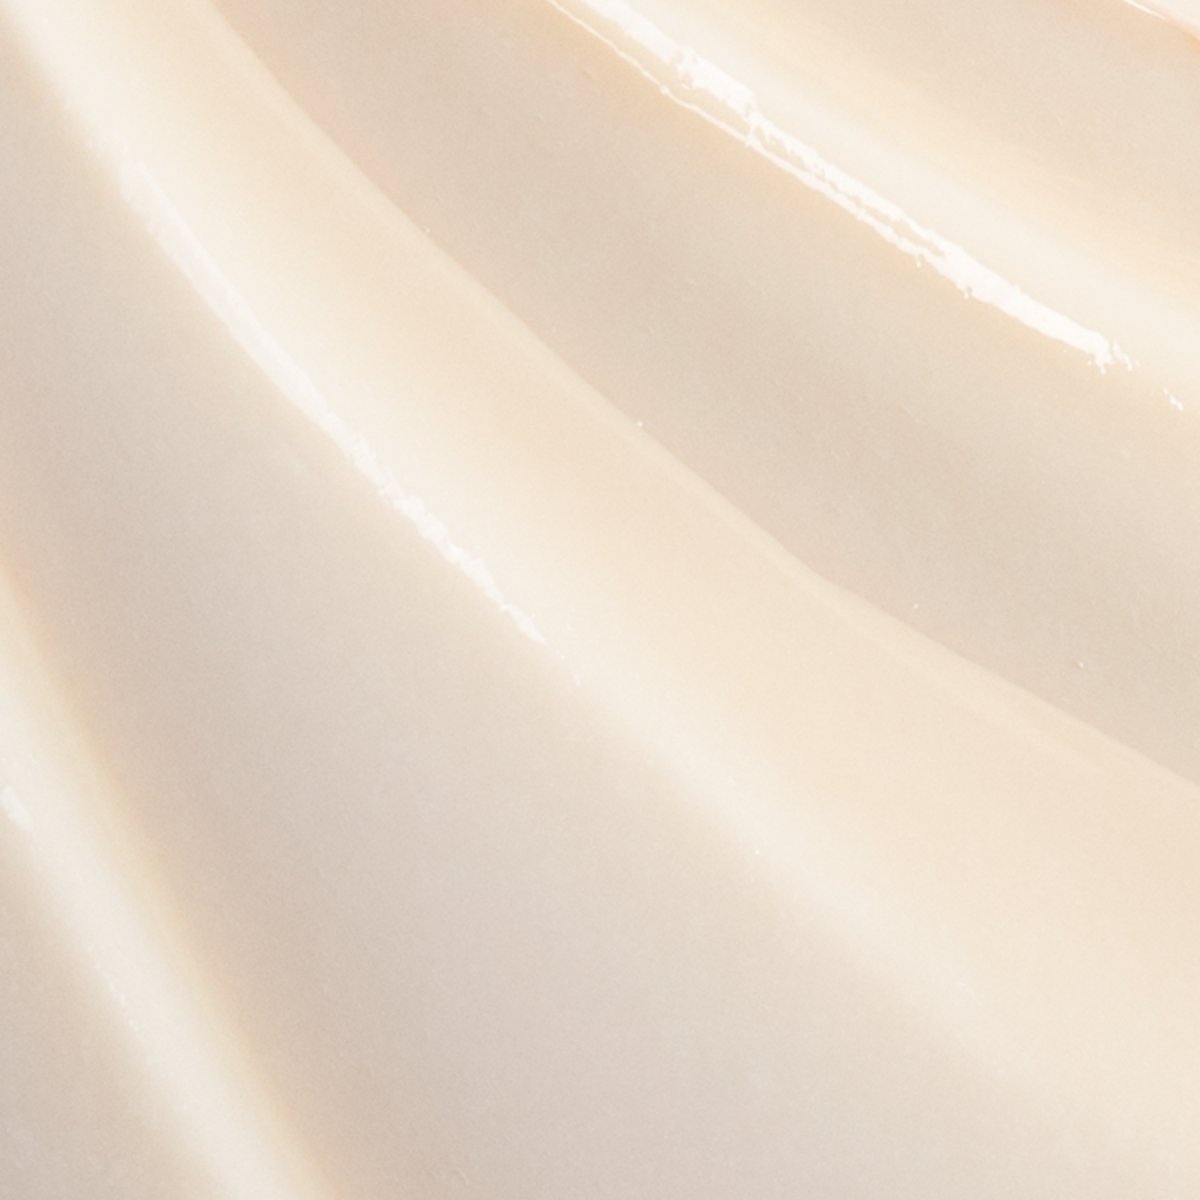 Garnier Ultimate Blends Argan Richness (Argan Oil & Almond Cream) Shampoo 400ml - Intamarque 3600542462730